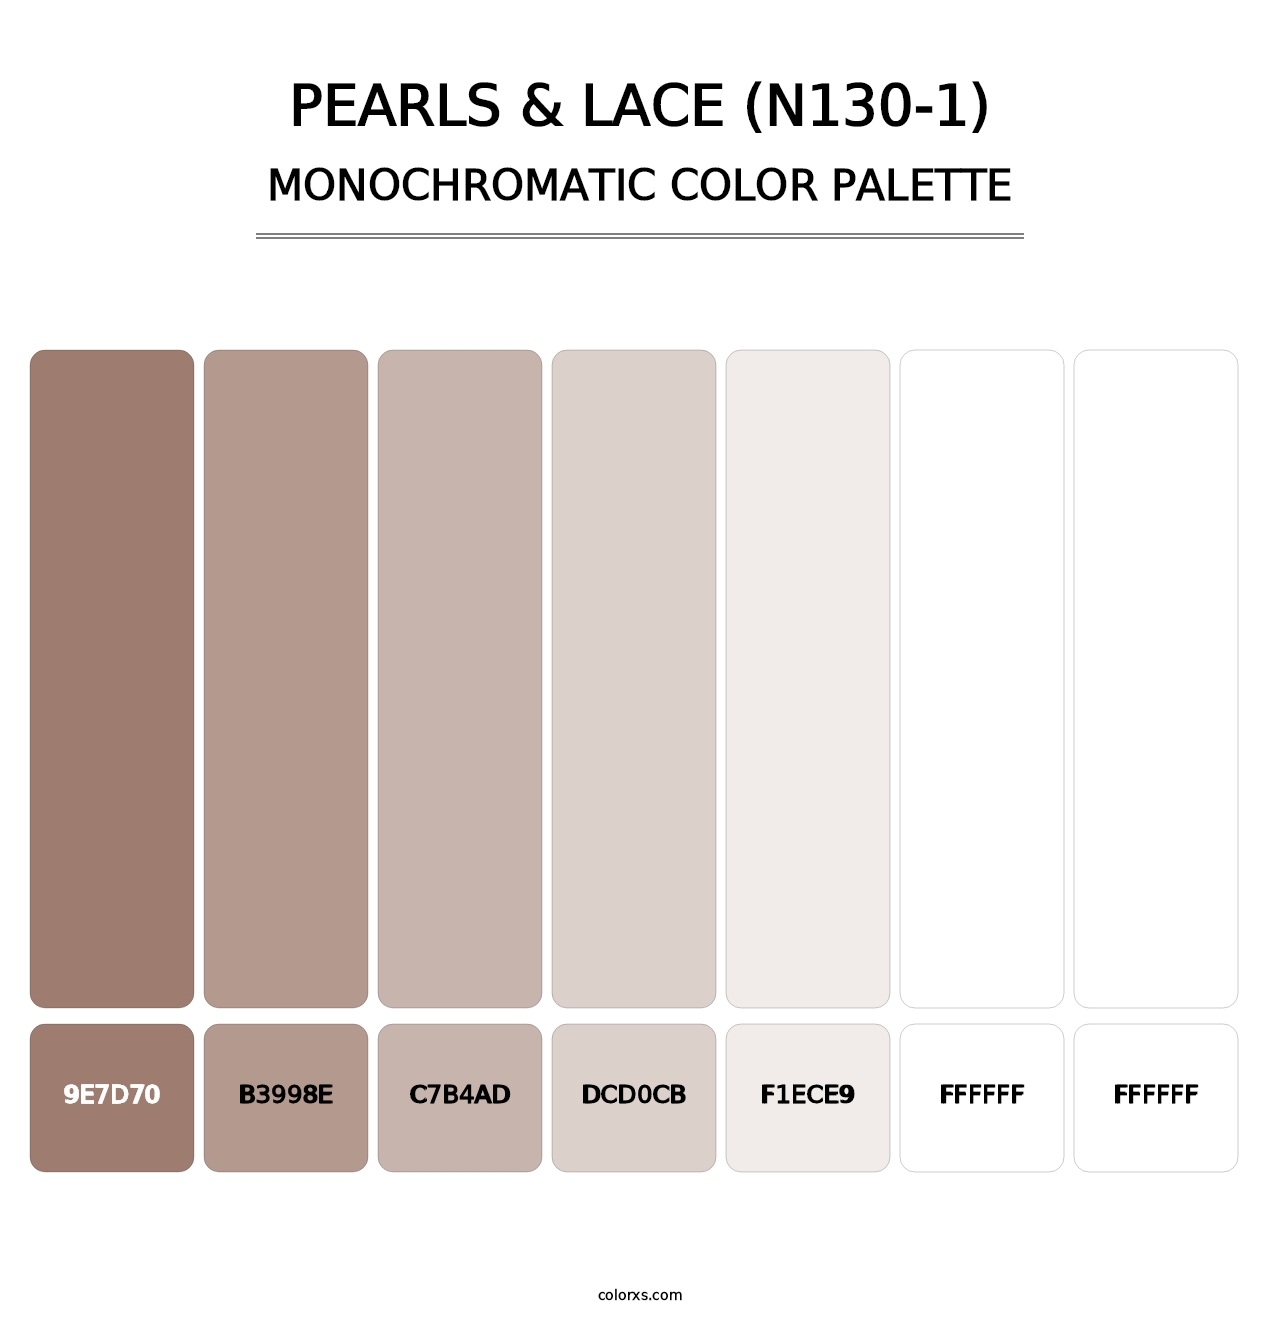 Pearls & Lace (N130-1) - Monochromatic Color Palette